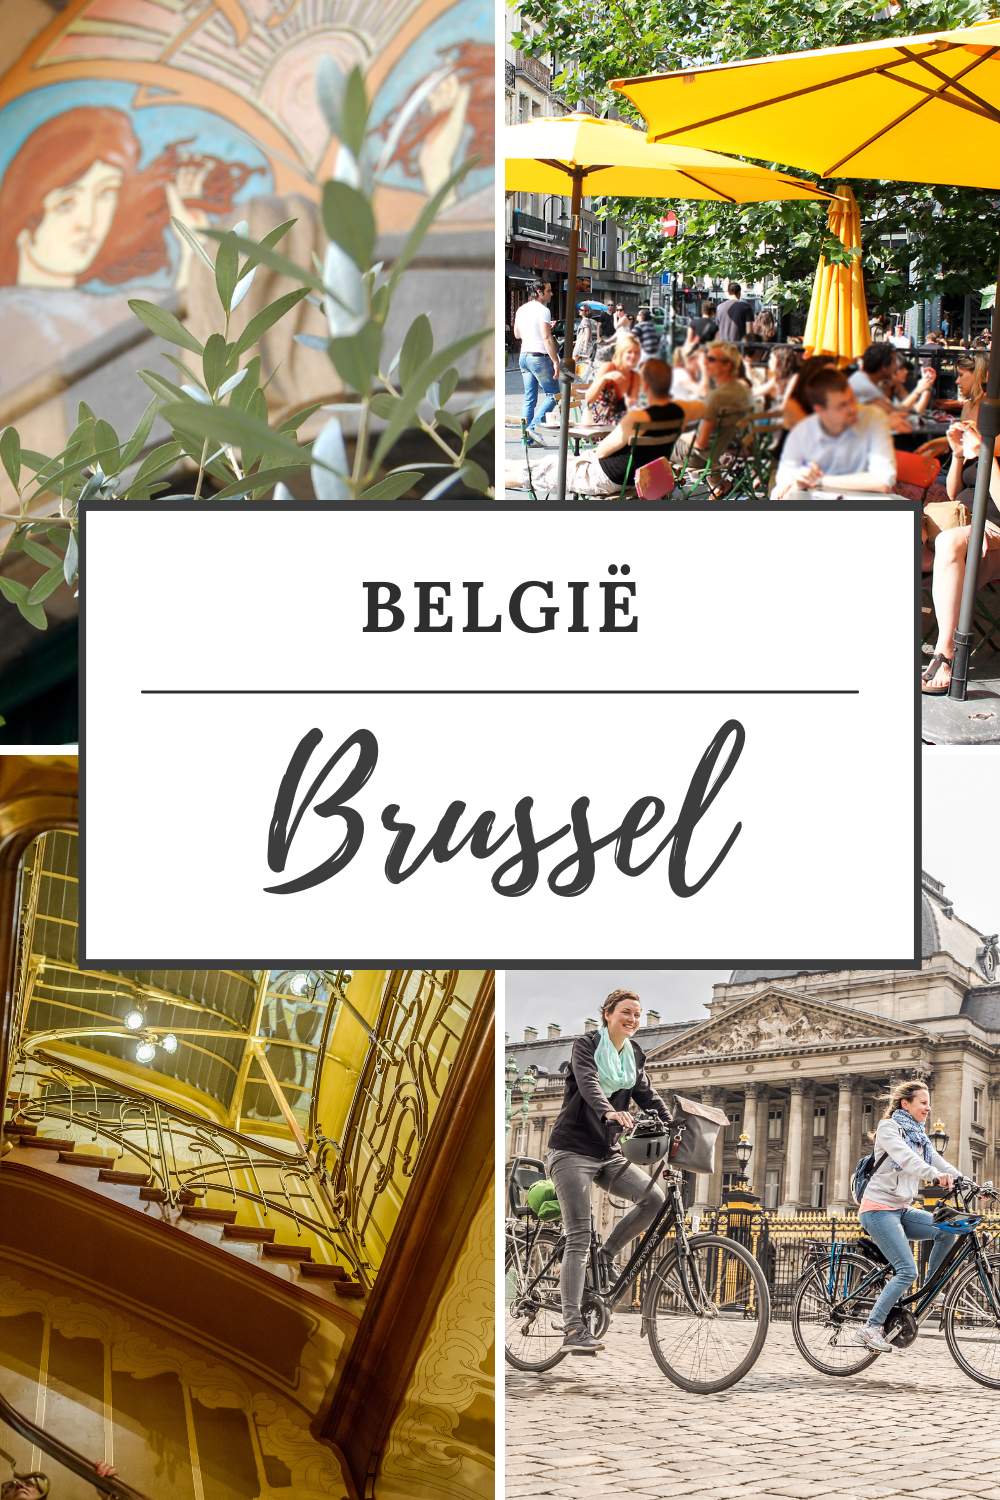 Stedentrip Brussel, alle tips voor een weekendje Brussel | Mooistestedentrips.nl